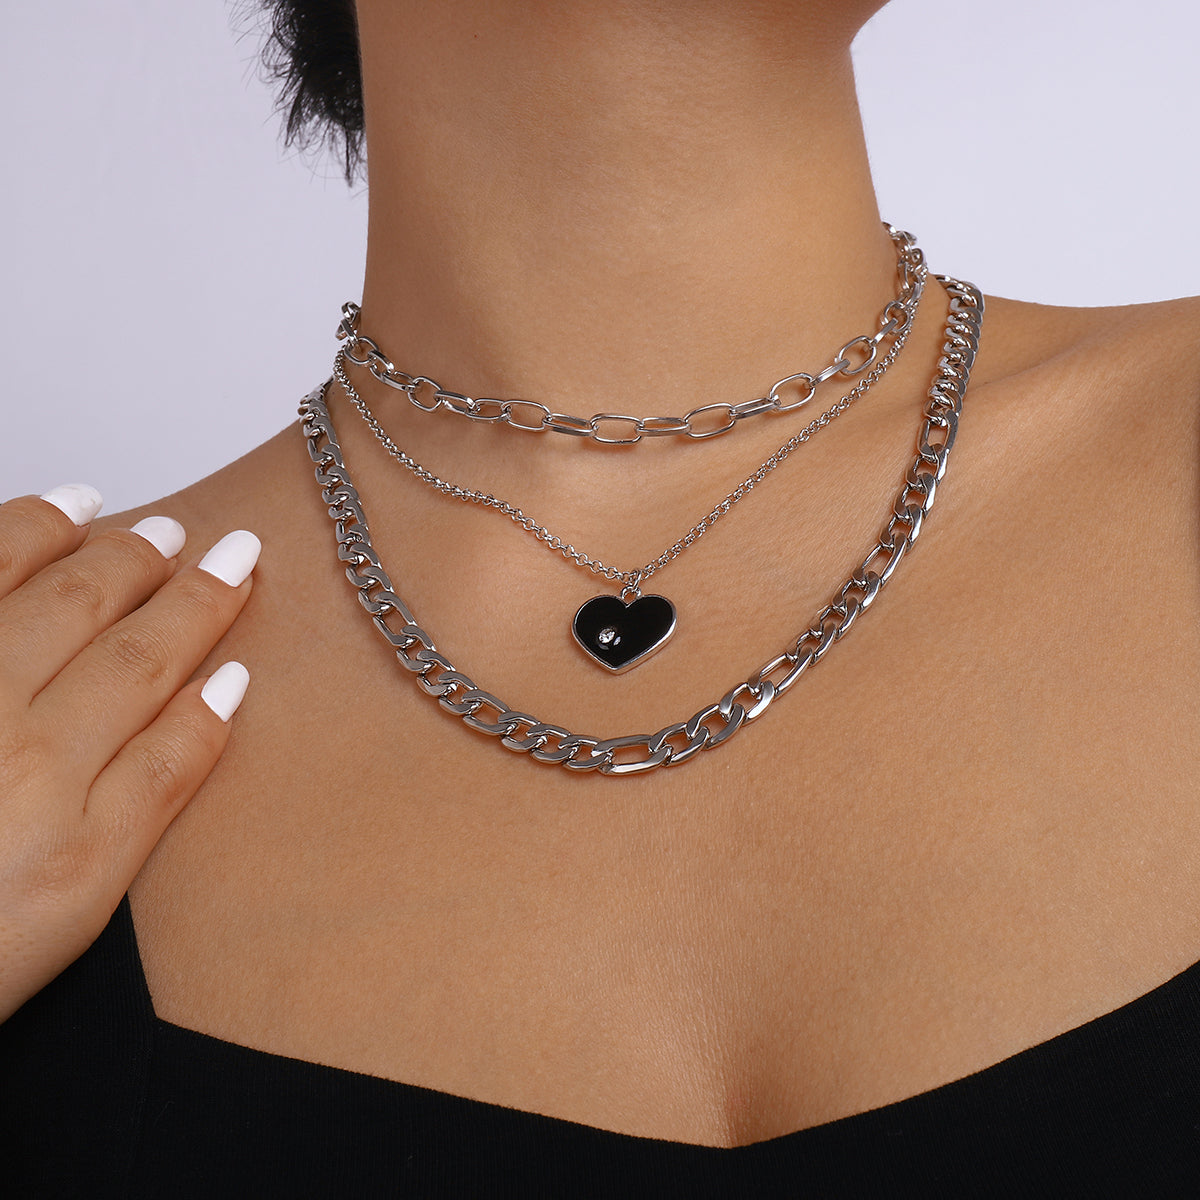 Punk Layered Chain Enamel Heart Pendant Necklace medyjewelry